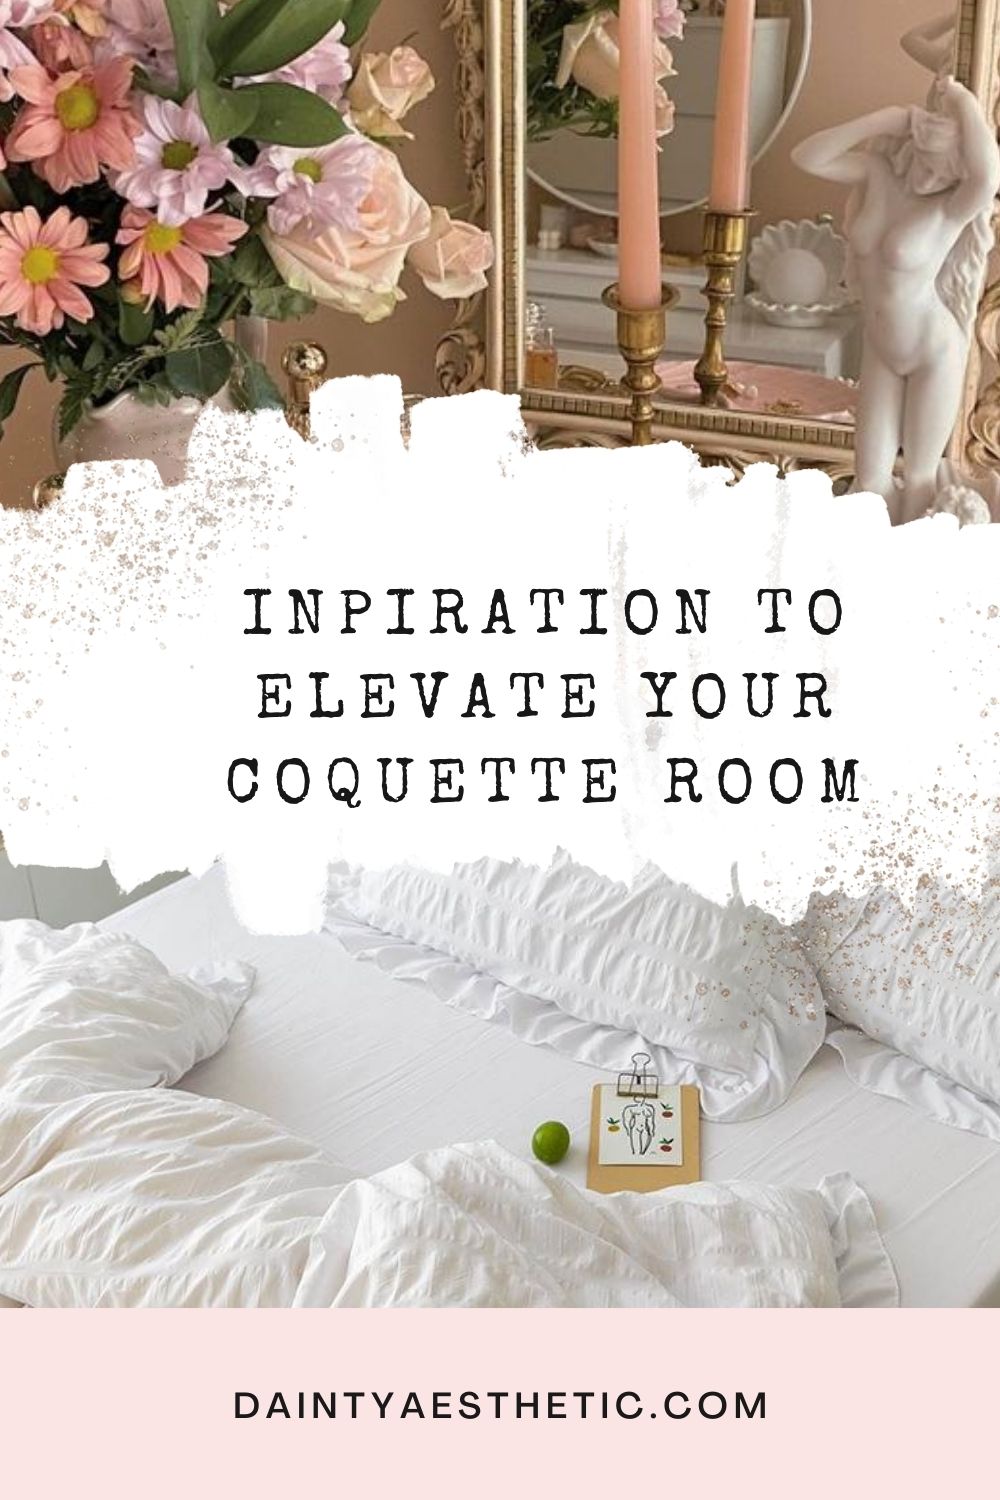 Coquette Room inspiration